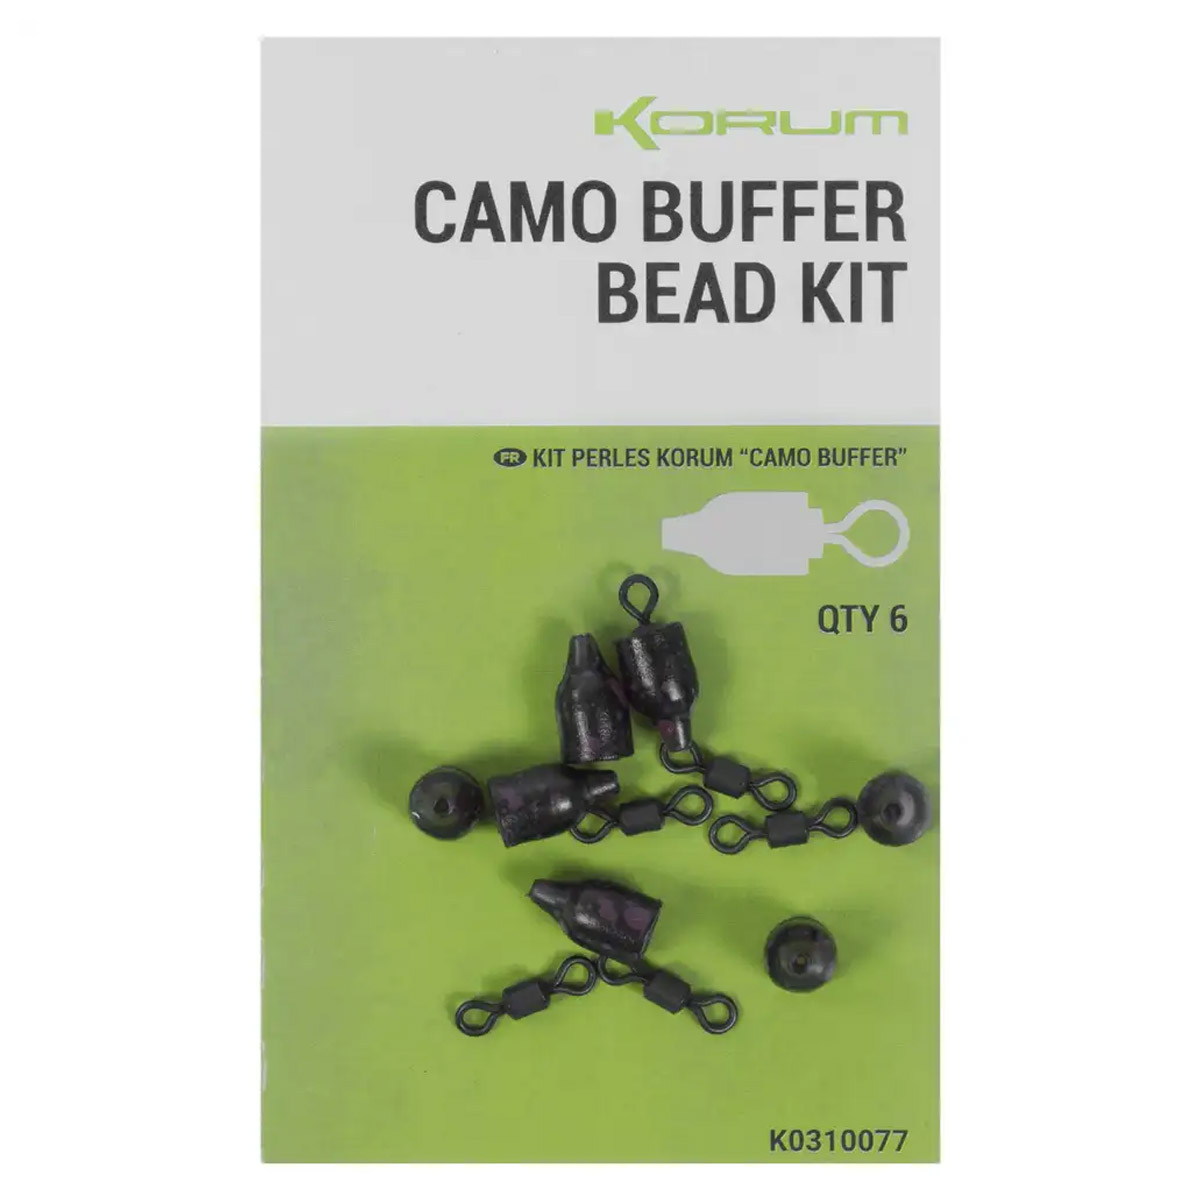 Korum Camo Buffer Bead Kit